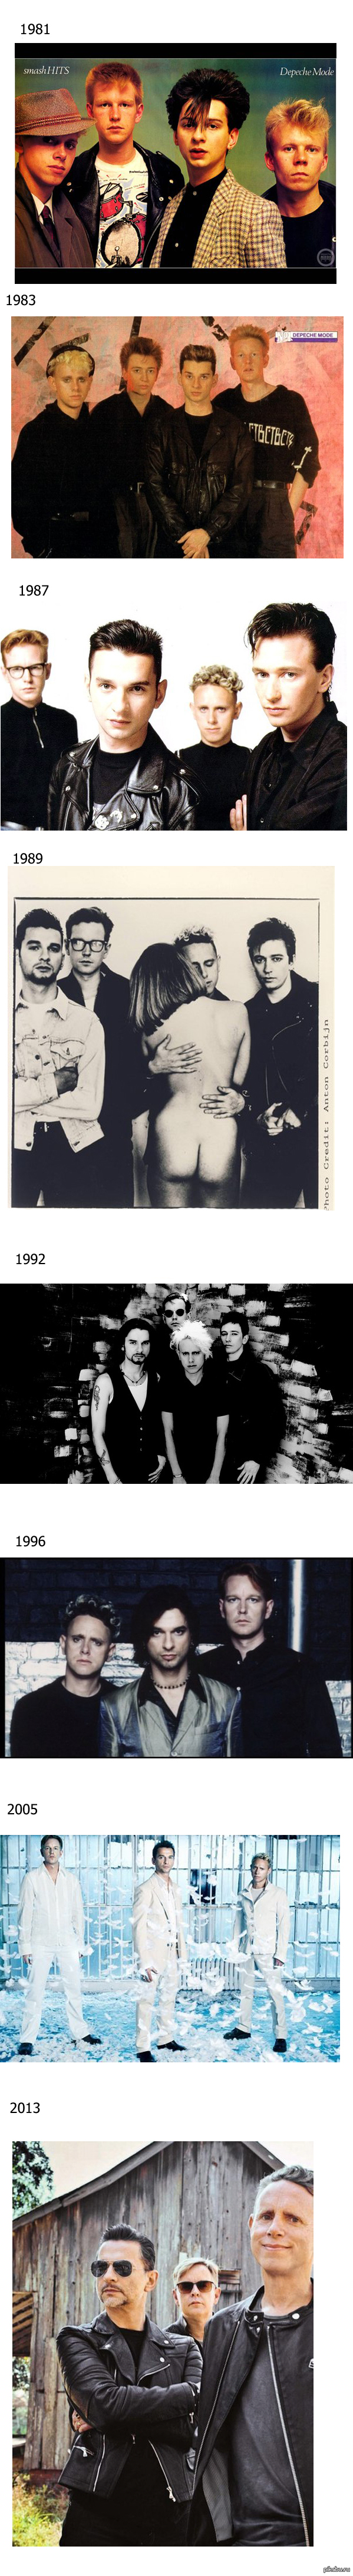  Depeche Mode   http://pikabu.ru/story/_1256848